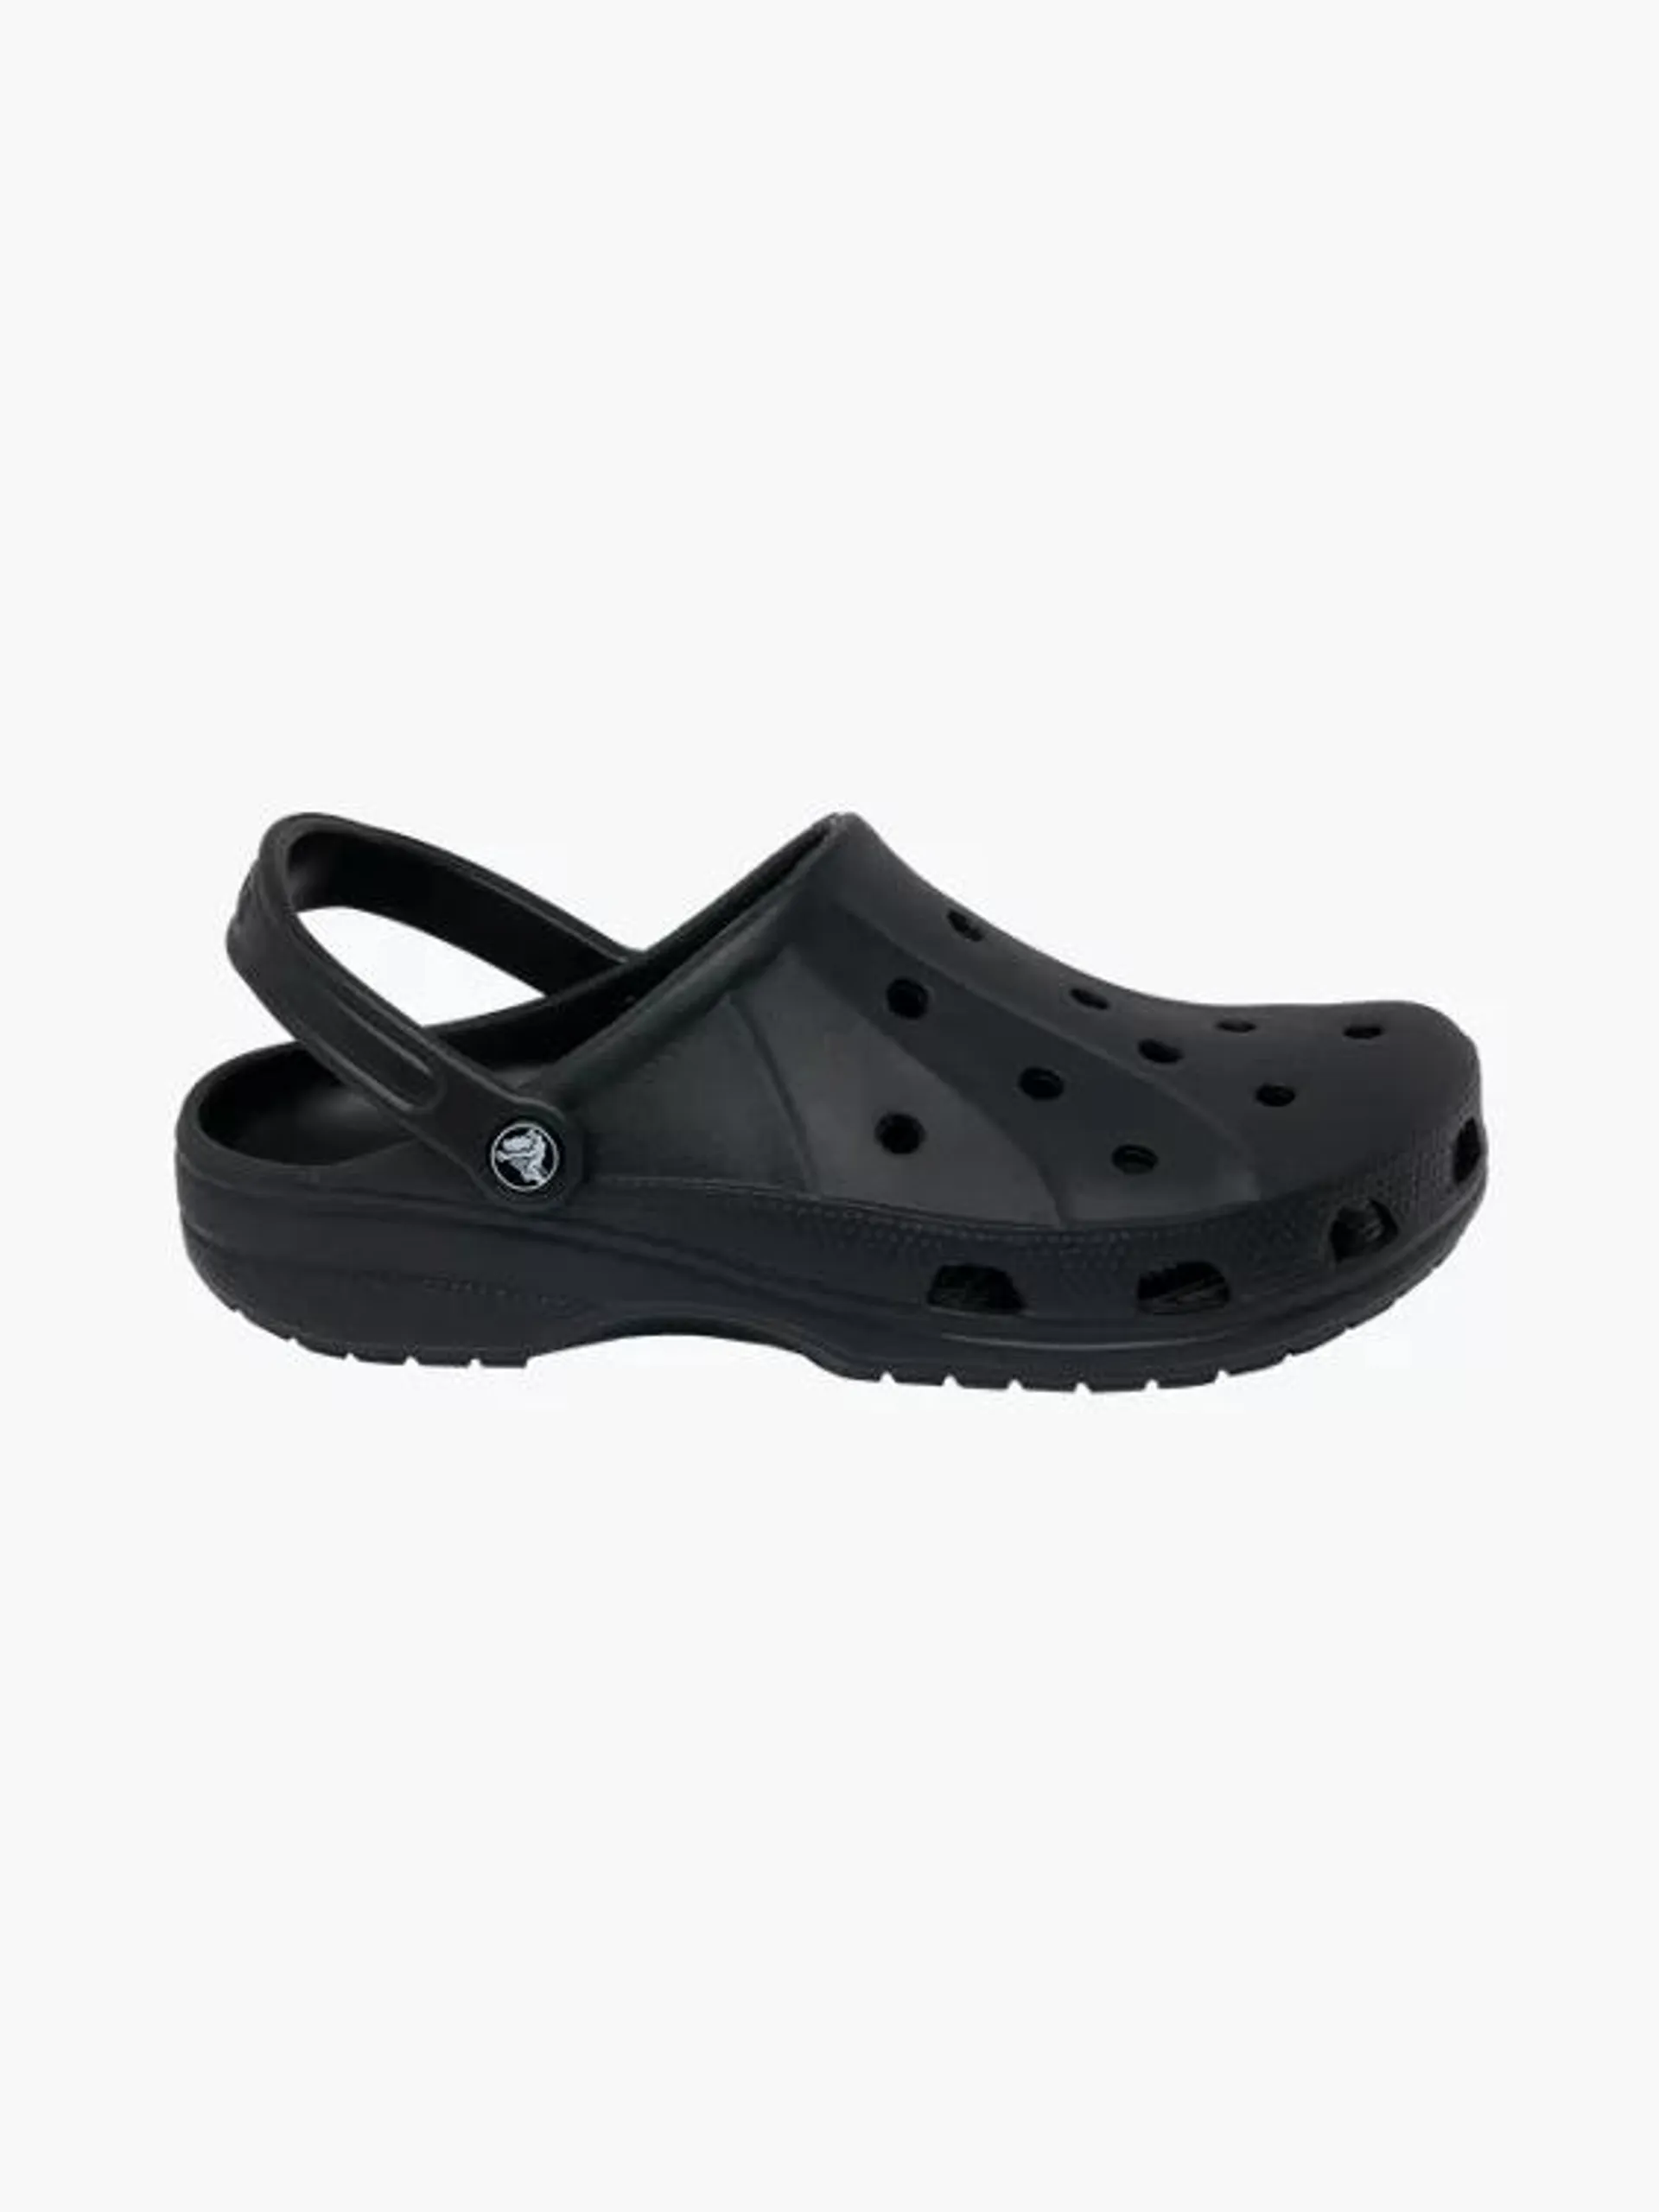 Ladies Crocs Black Baya Clog